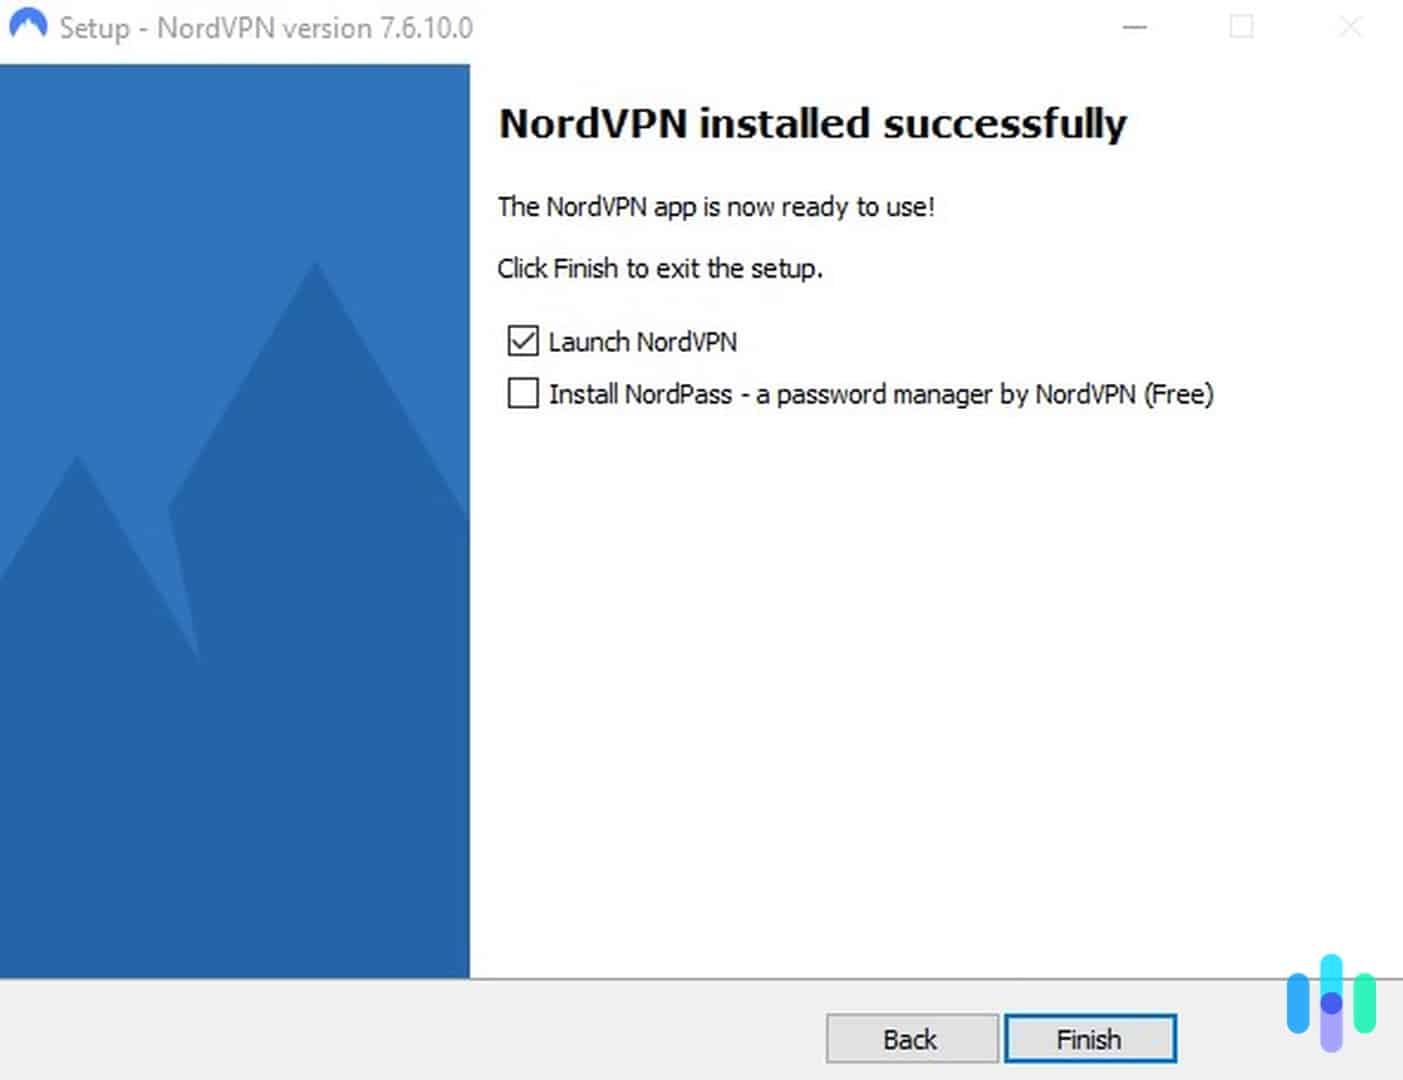 Installing the NordVPN app on Windows 10